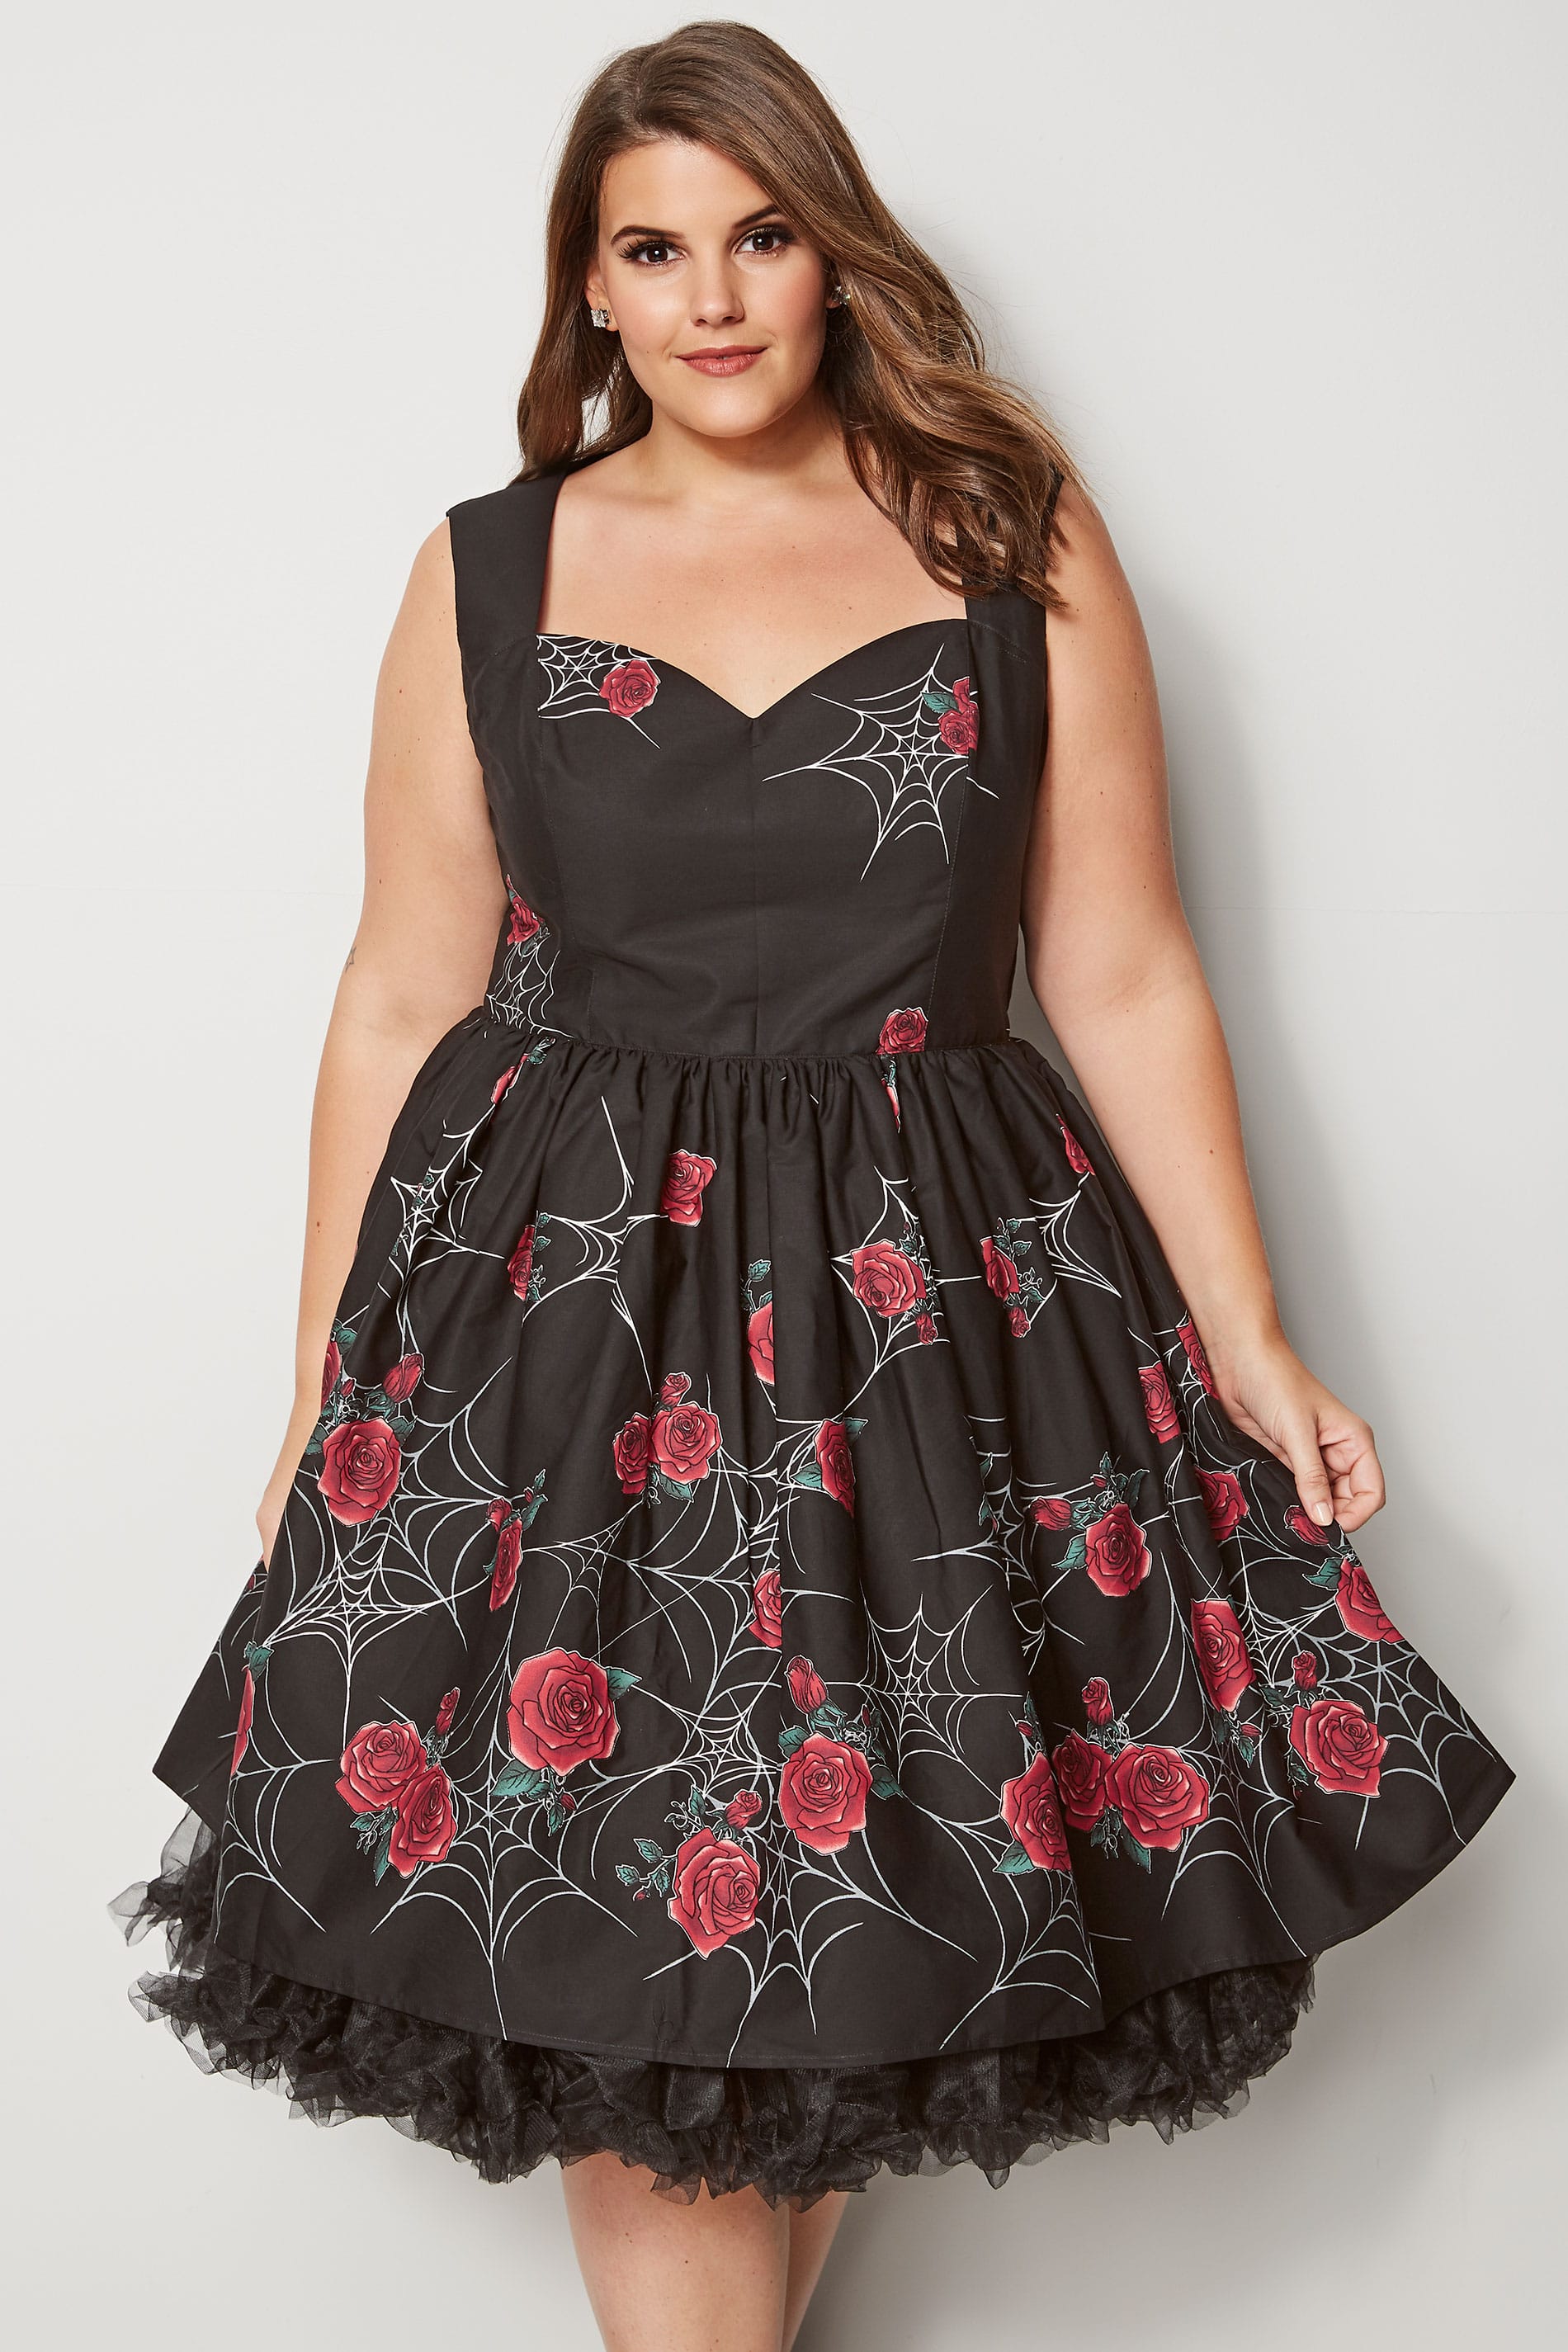 HELL BUNNY Black Rose & Cobweb Print Sabrina Dress, plus size 16 to 32